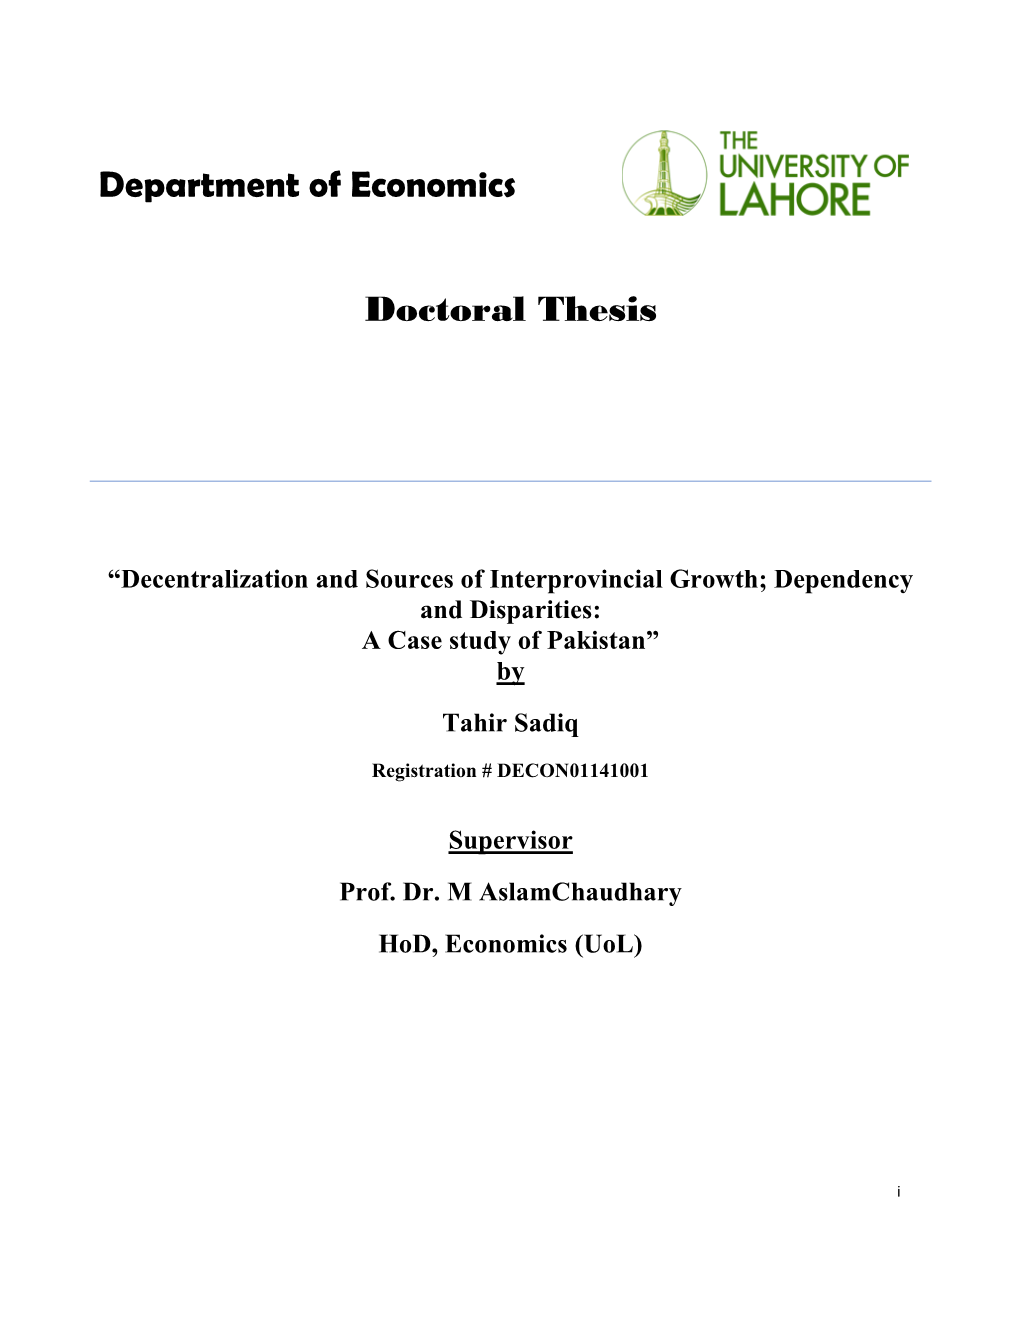 Department of Economics Doctoral Thesis